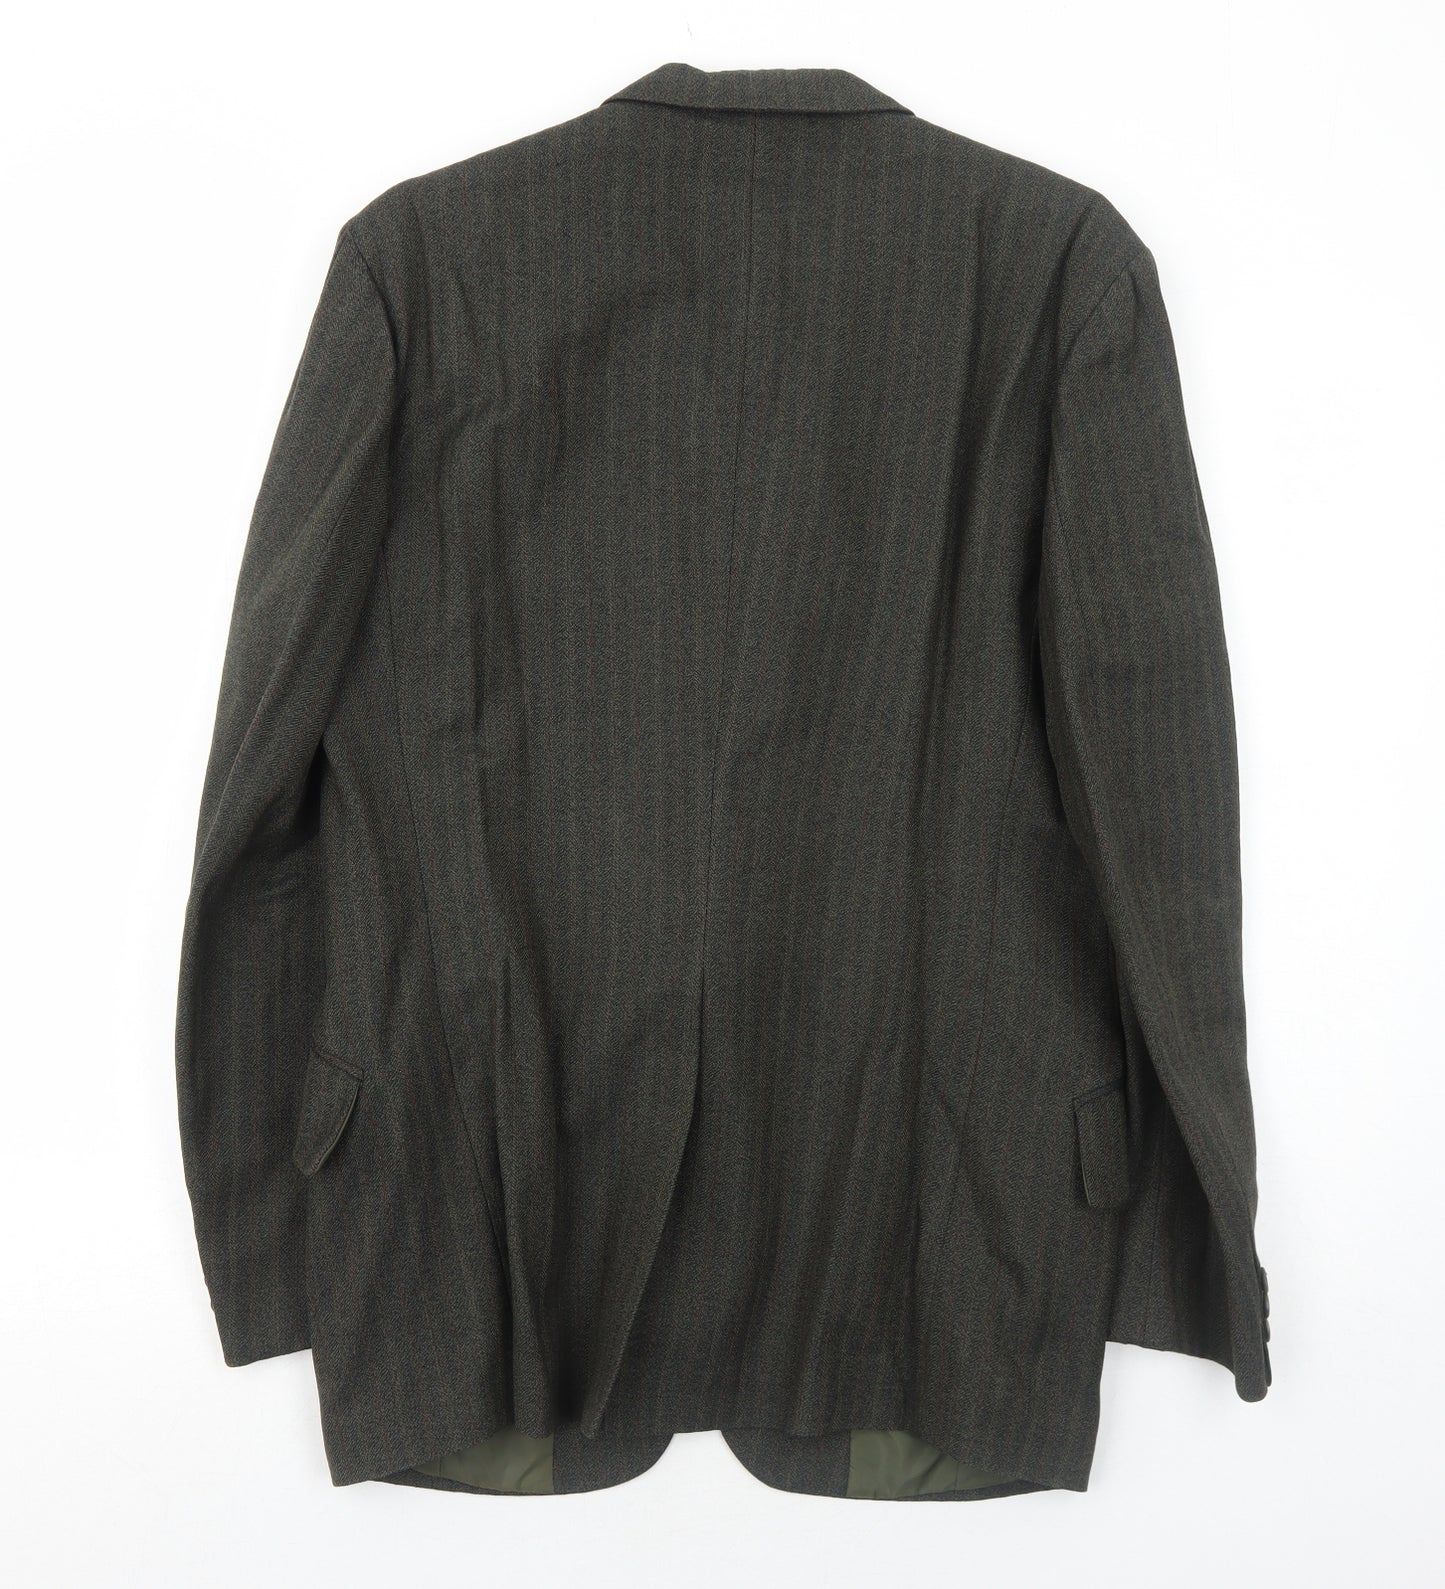 Browns Mens Grey Striped Wool Jacket Suit Jacket Size 42 Regular